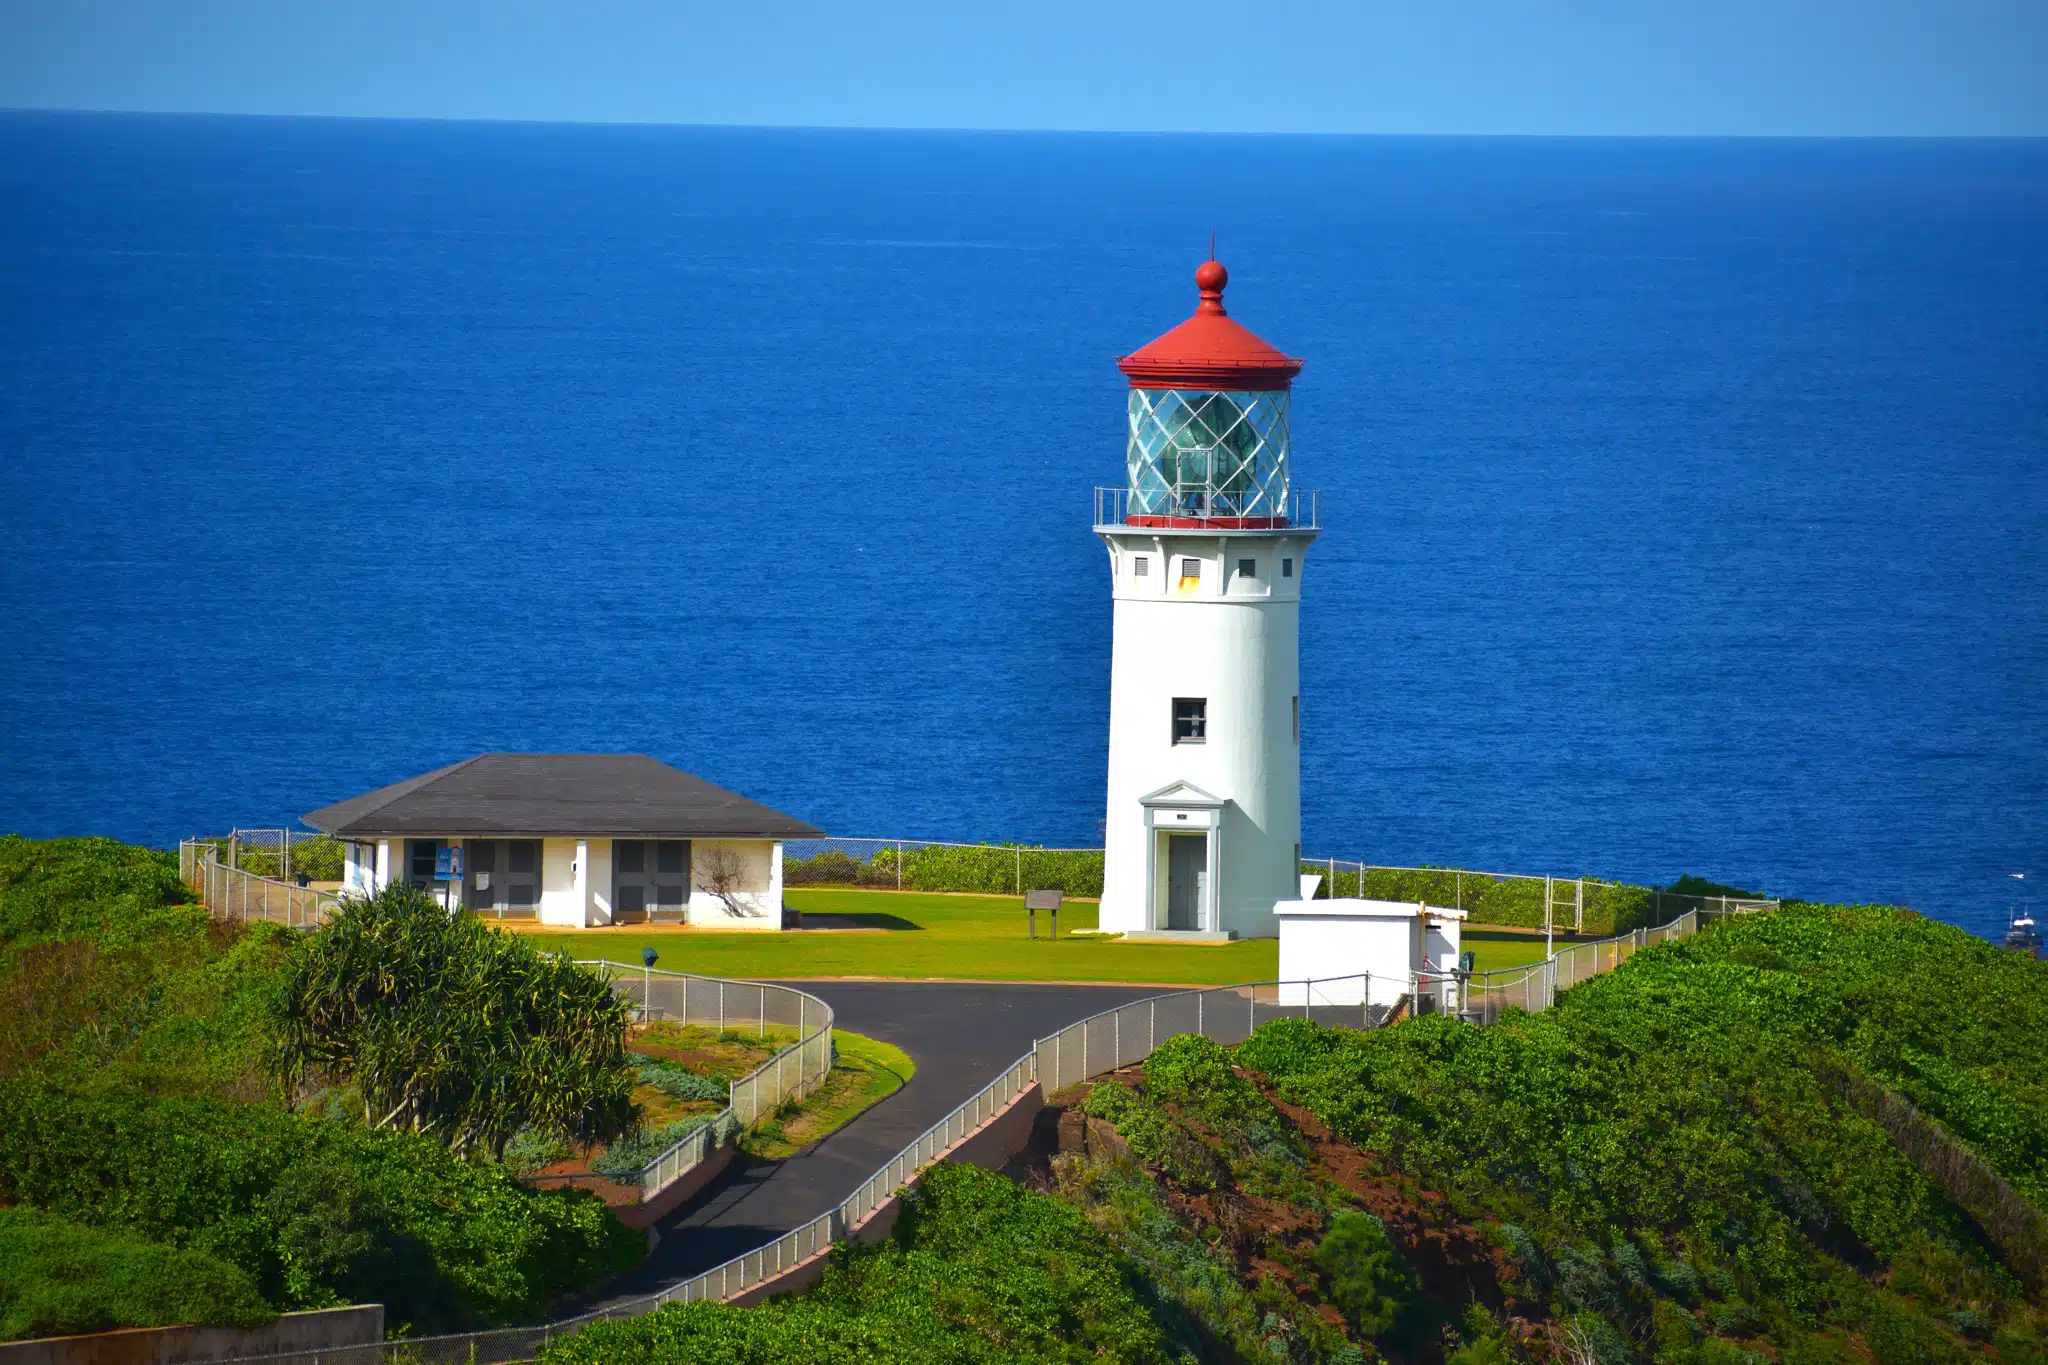 Kilauea Point Lighthouse is a Heritage Site located in the city of Kilauea on Kauai, Hawaii